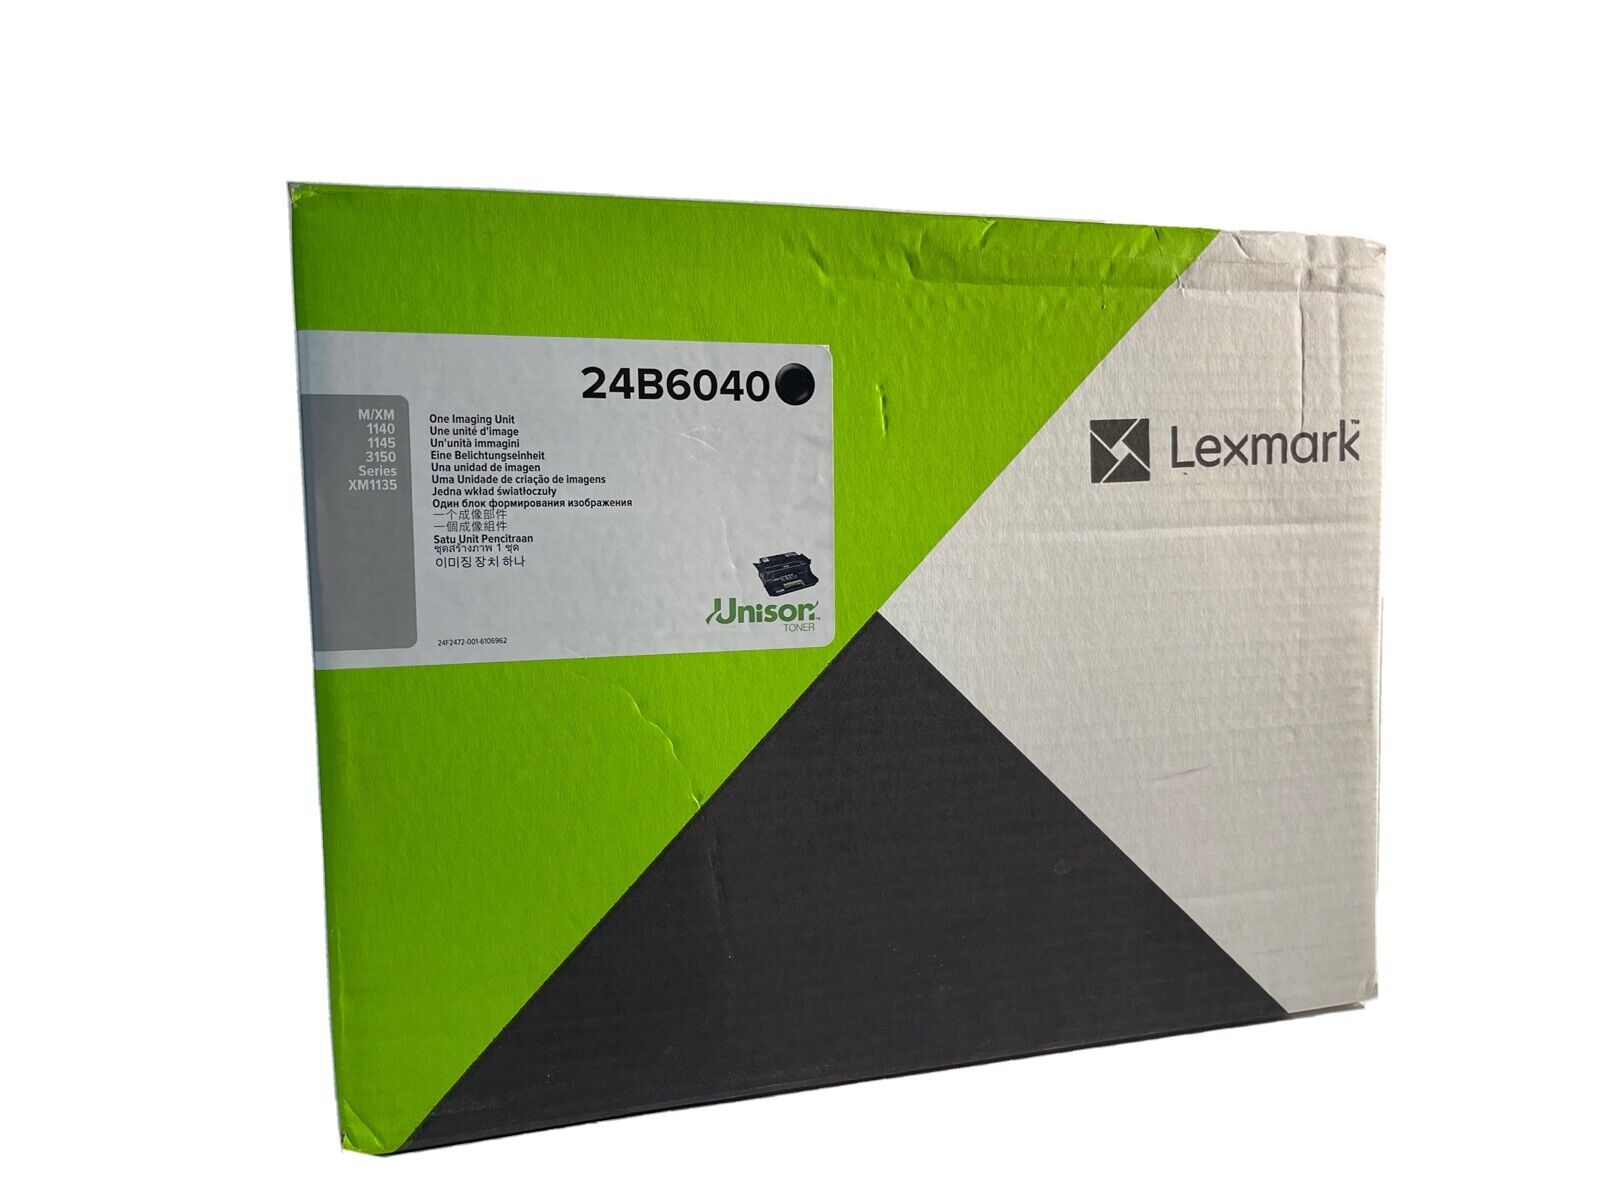 Genuine Lexmark 24B6040 Imaging Unit New Unopened Lot of (2) Units